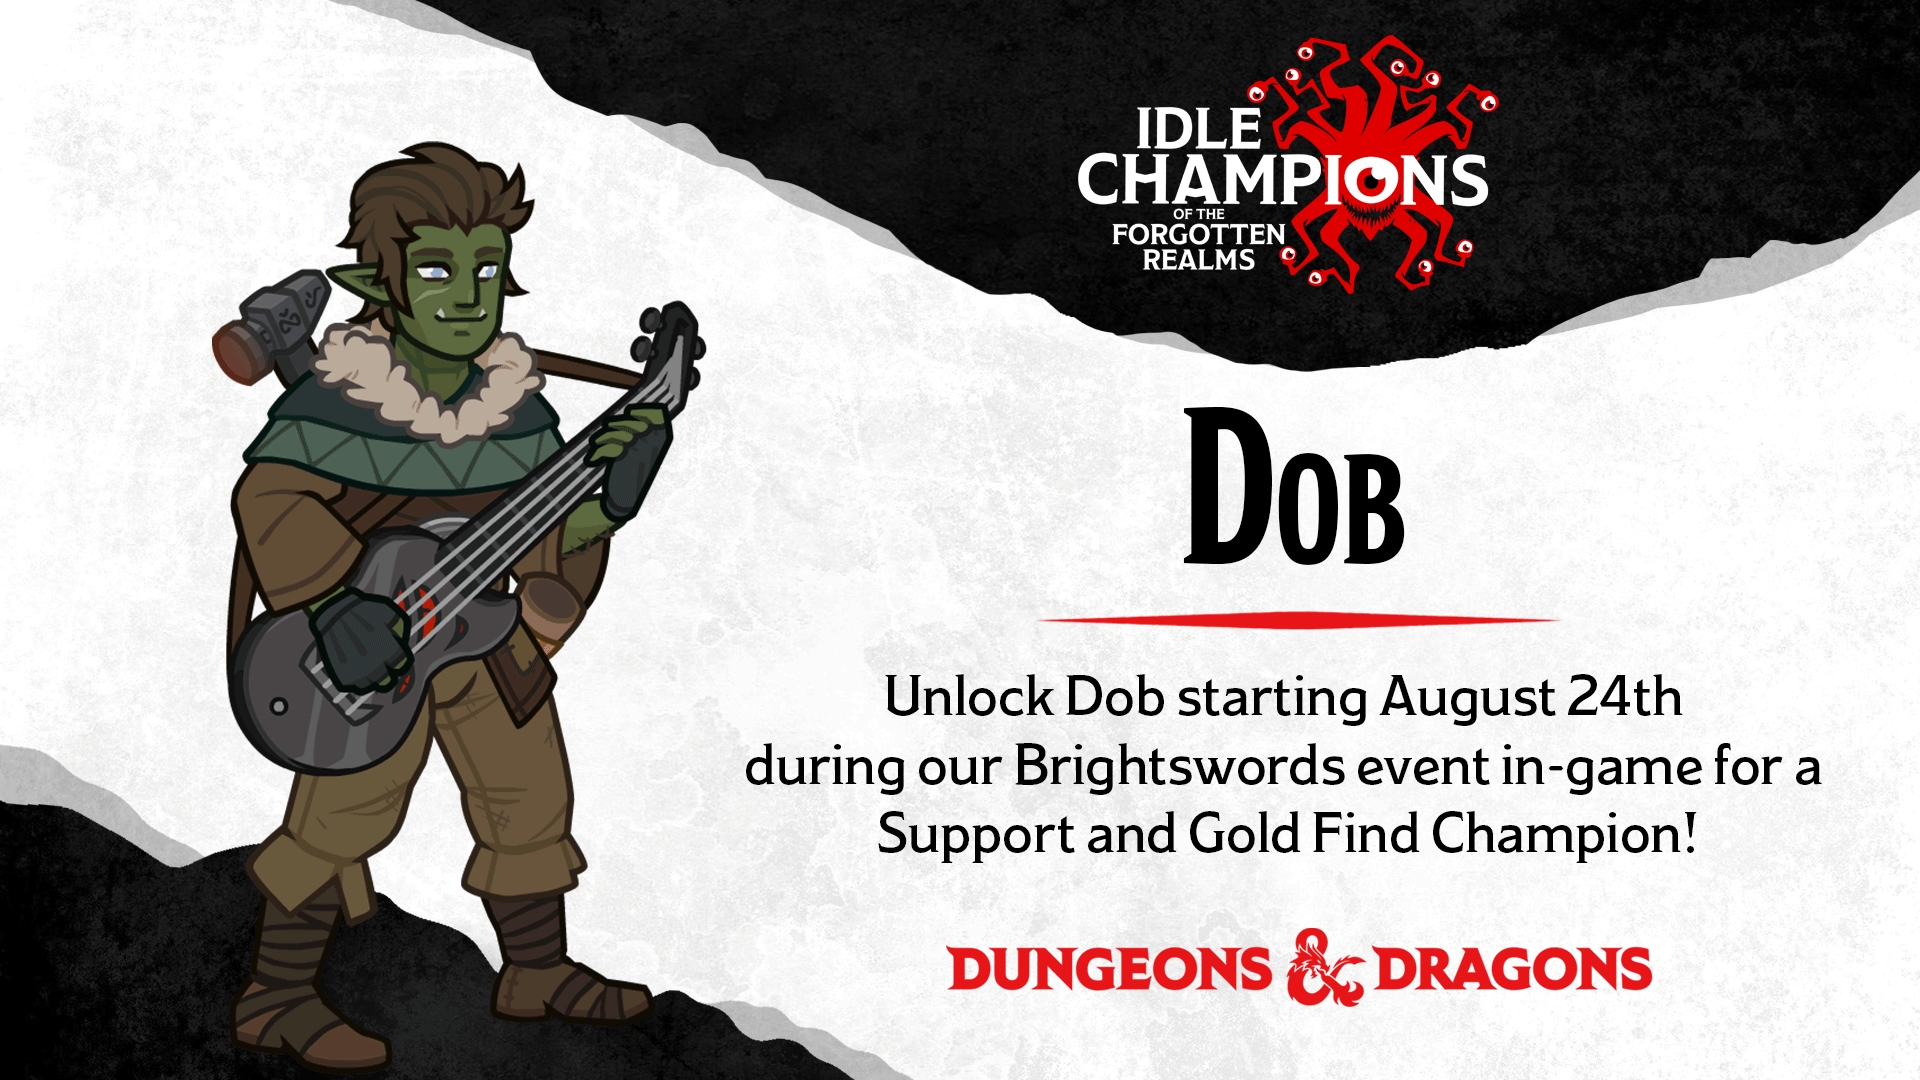 Dungeons & Dragons Dob